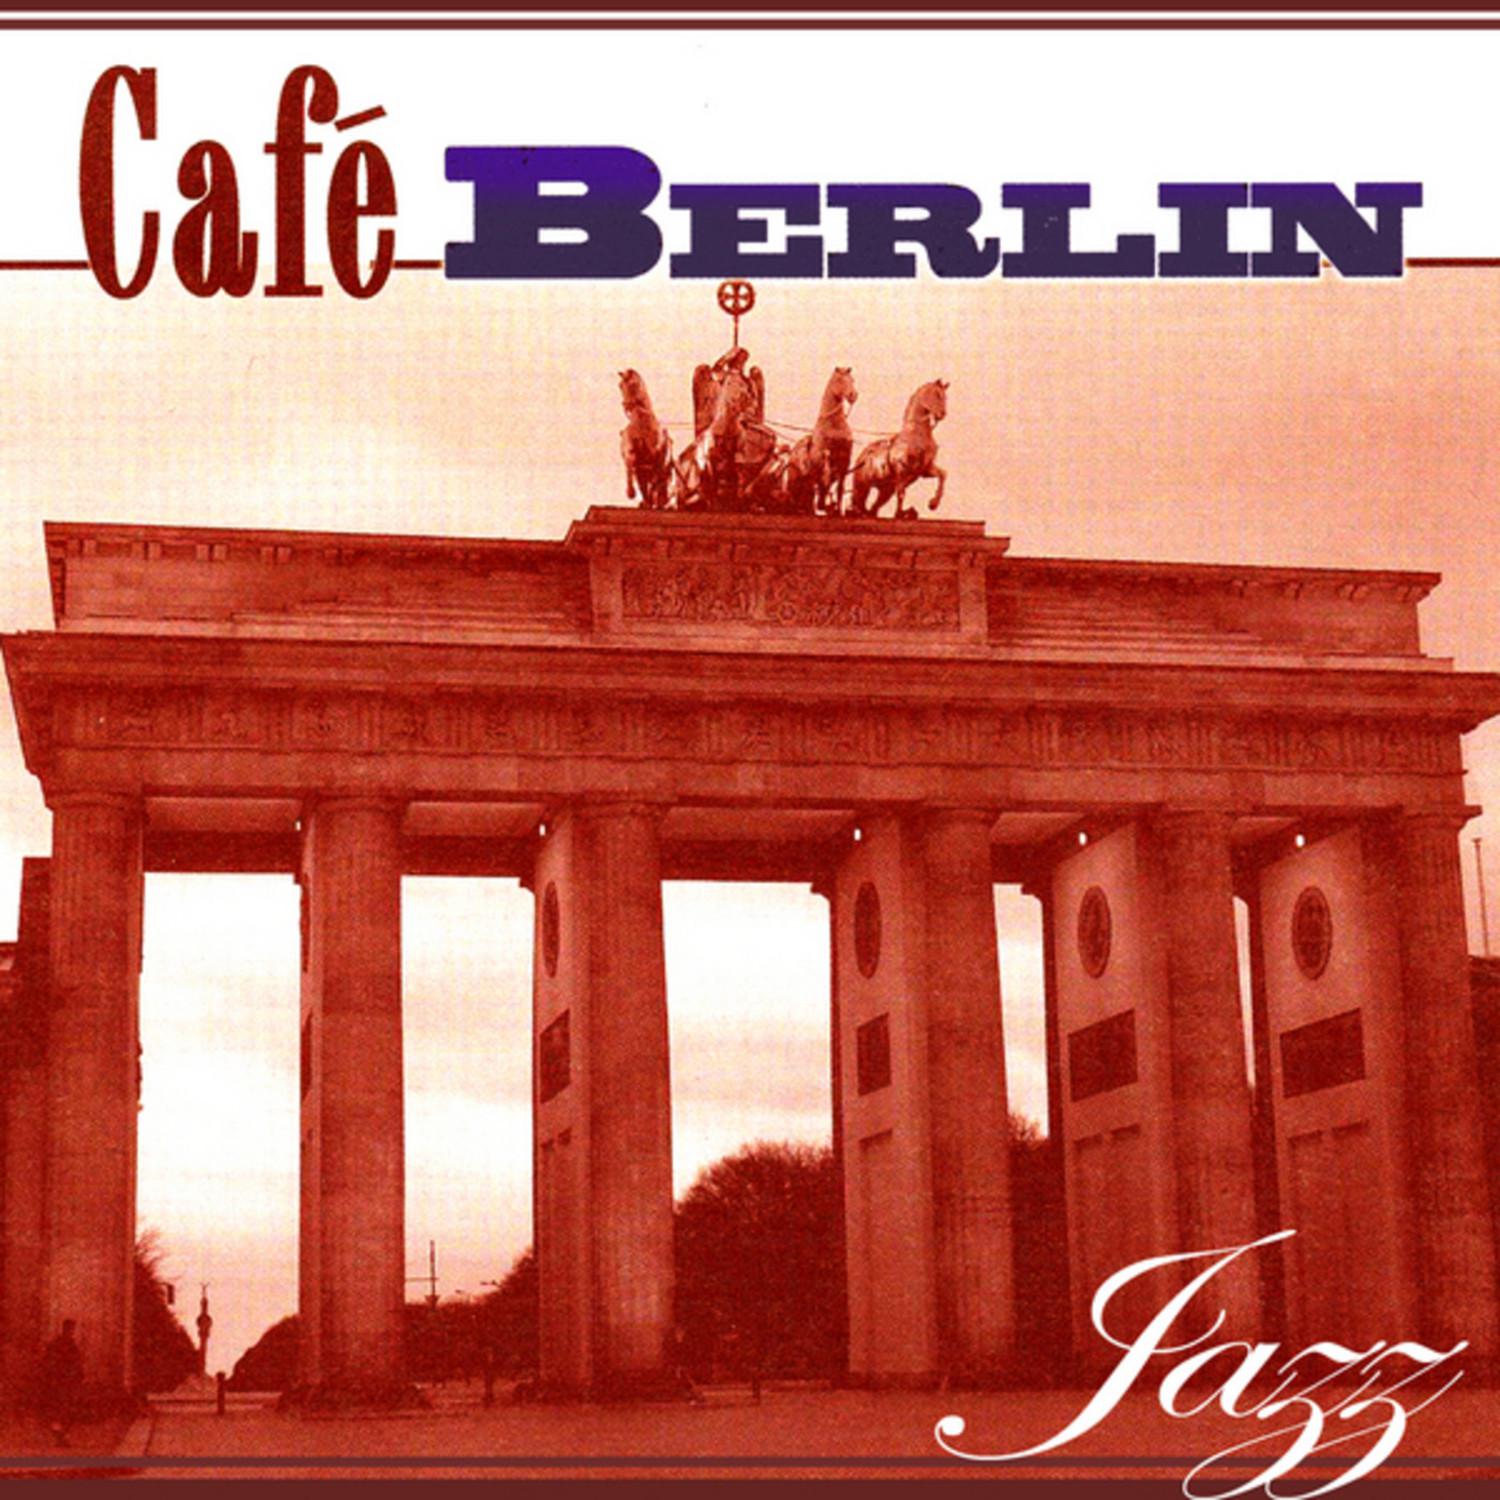 Jazz Cafe Berlin